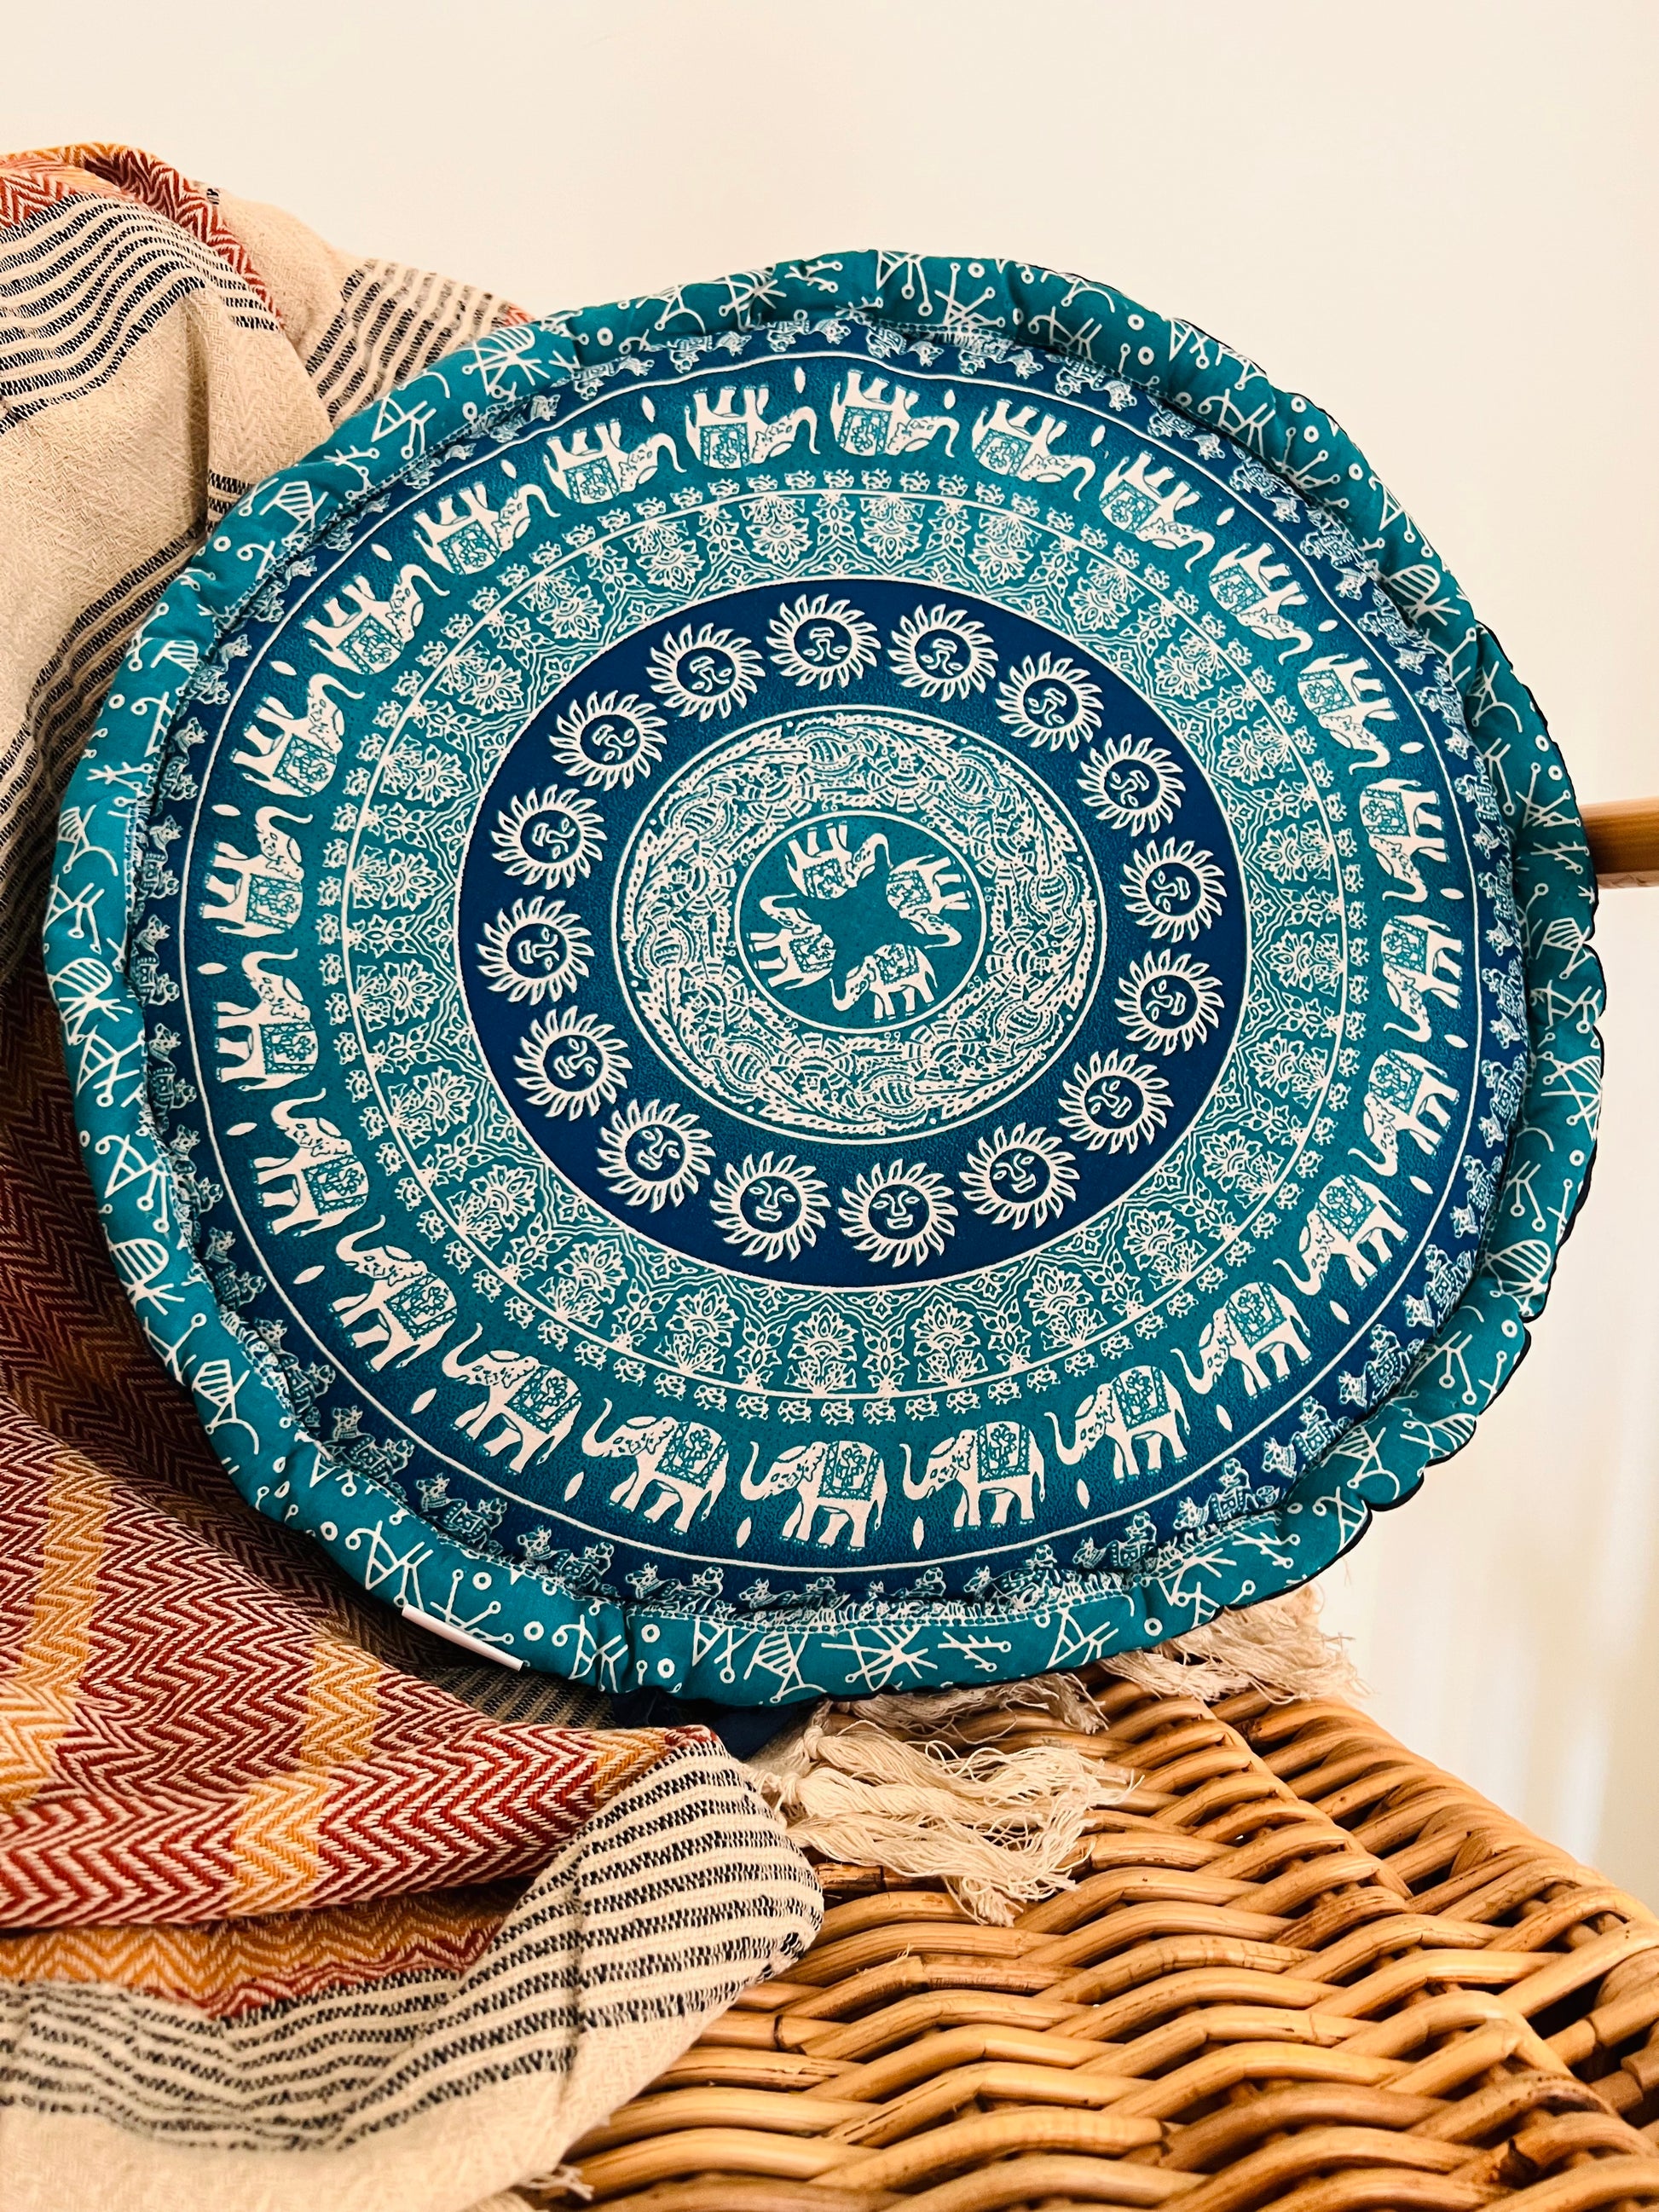 Handmade, Fair Trade, Large Yoga, Floor Cushion, Mandala Elephant Print, Blue